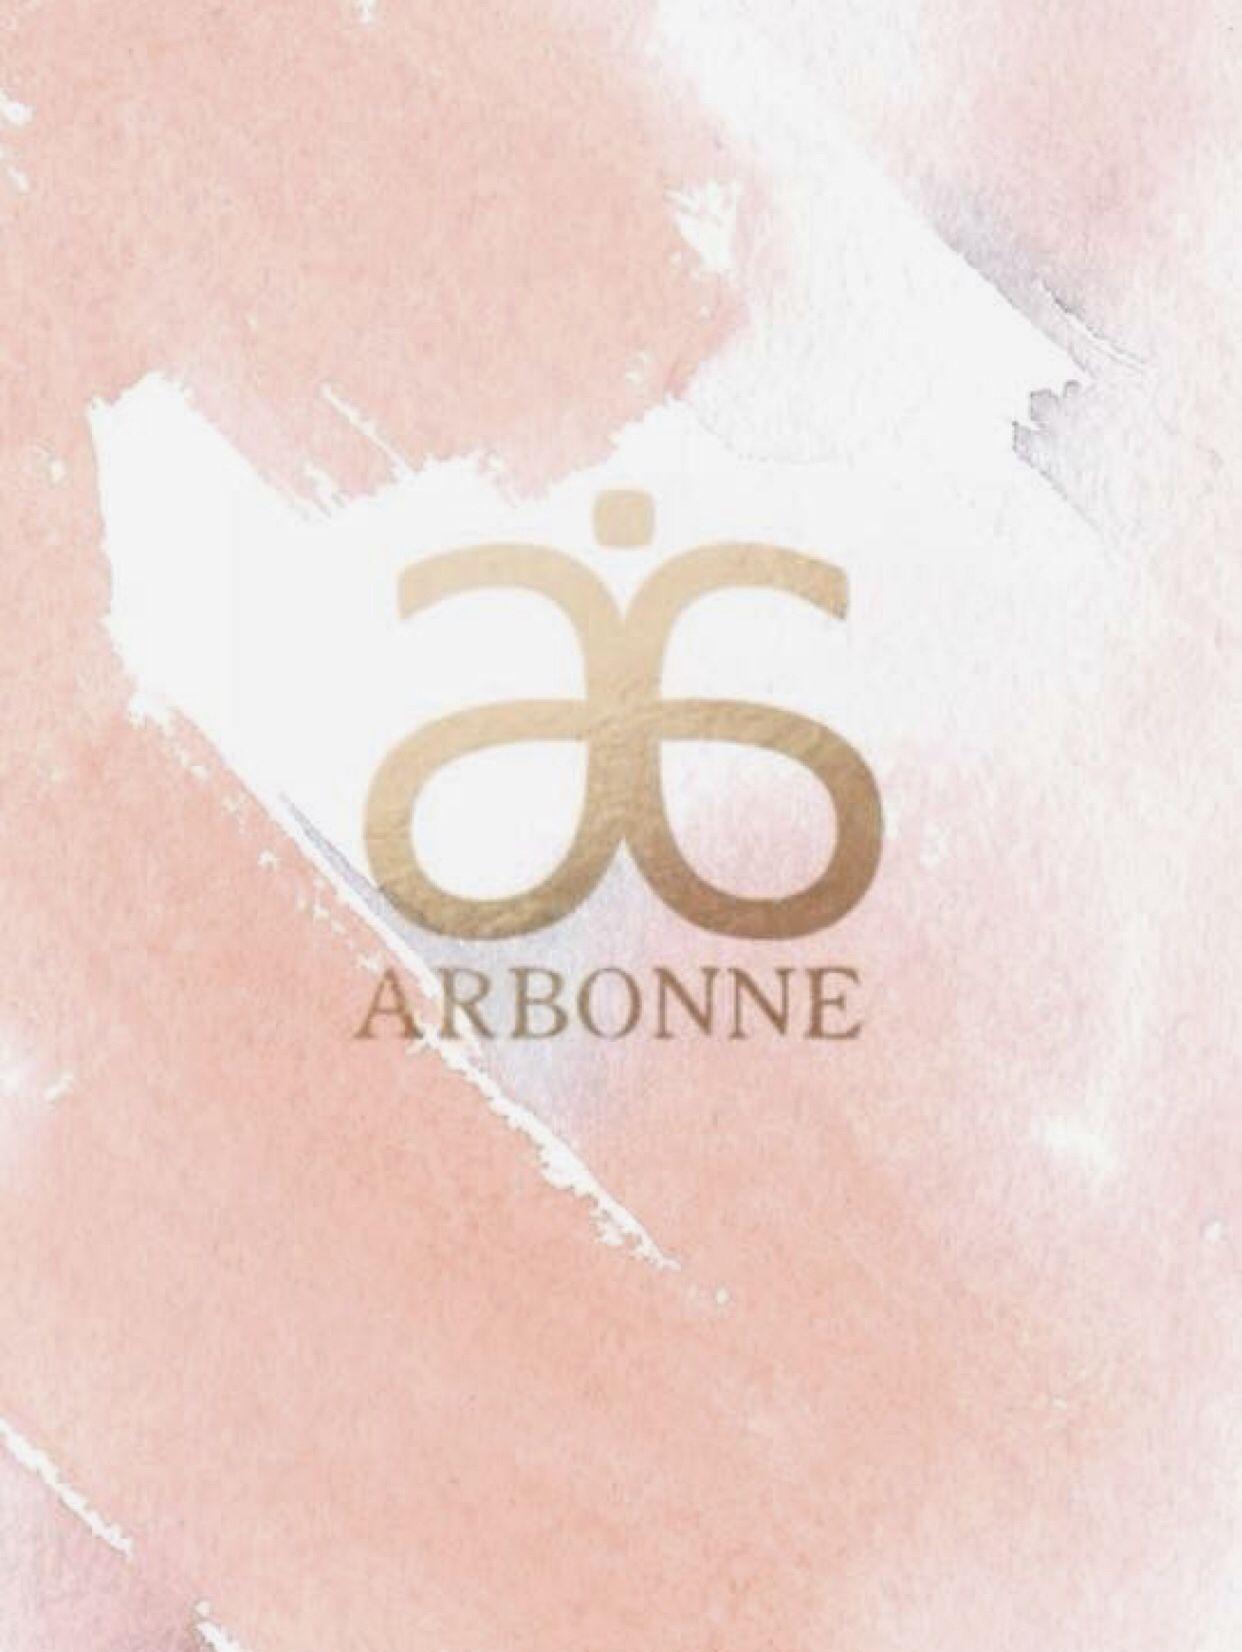 Arbone Logo - Pin by Riley Kister on A R B O N N E in 2019 | Arbonne, Arbonne logo ...